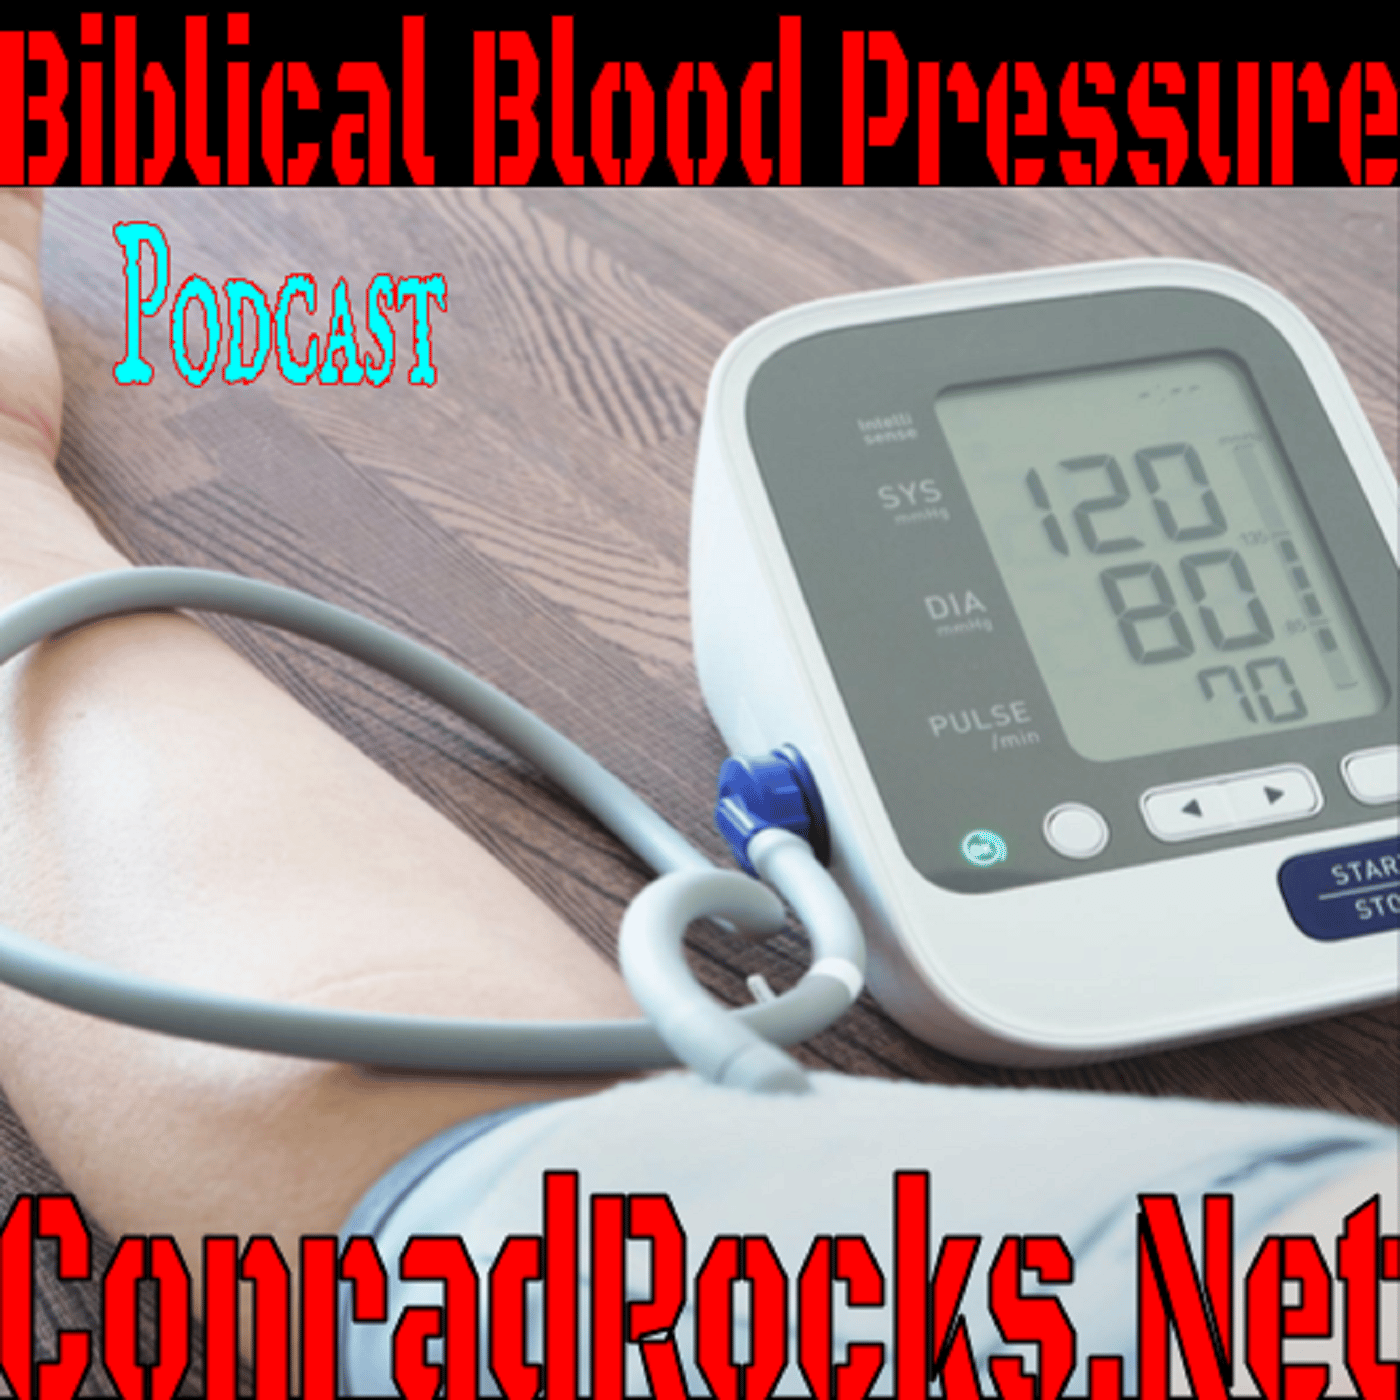 Conrad Rocks!: Biblical Blood Pressure